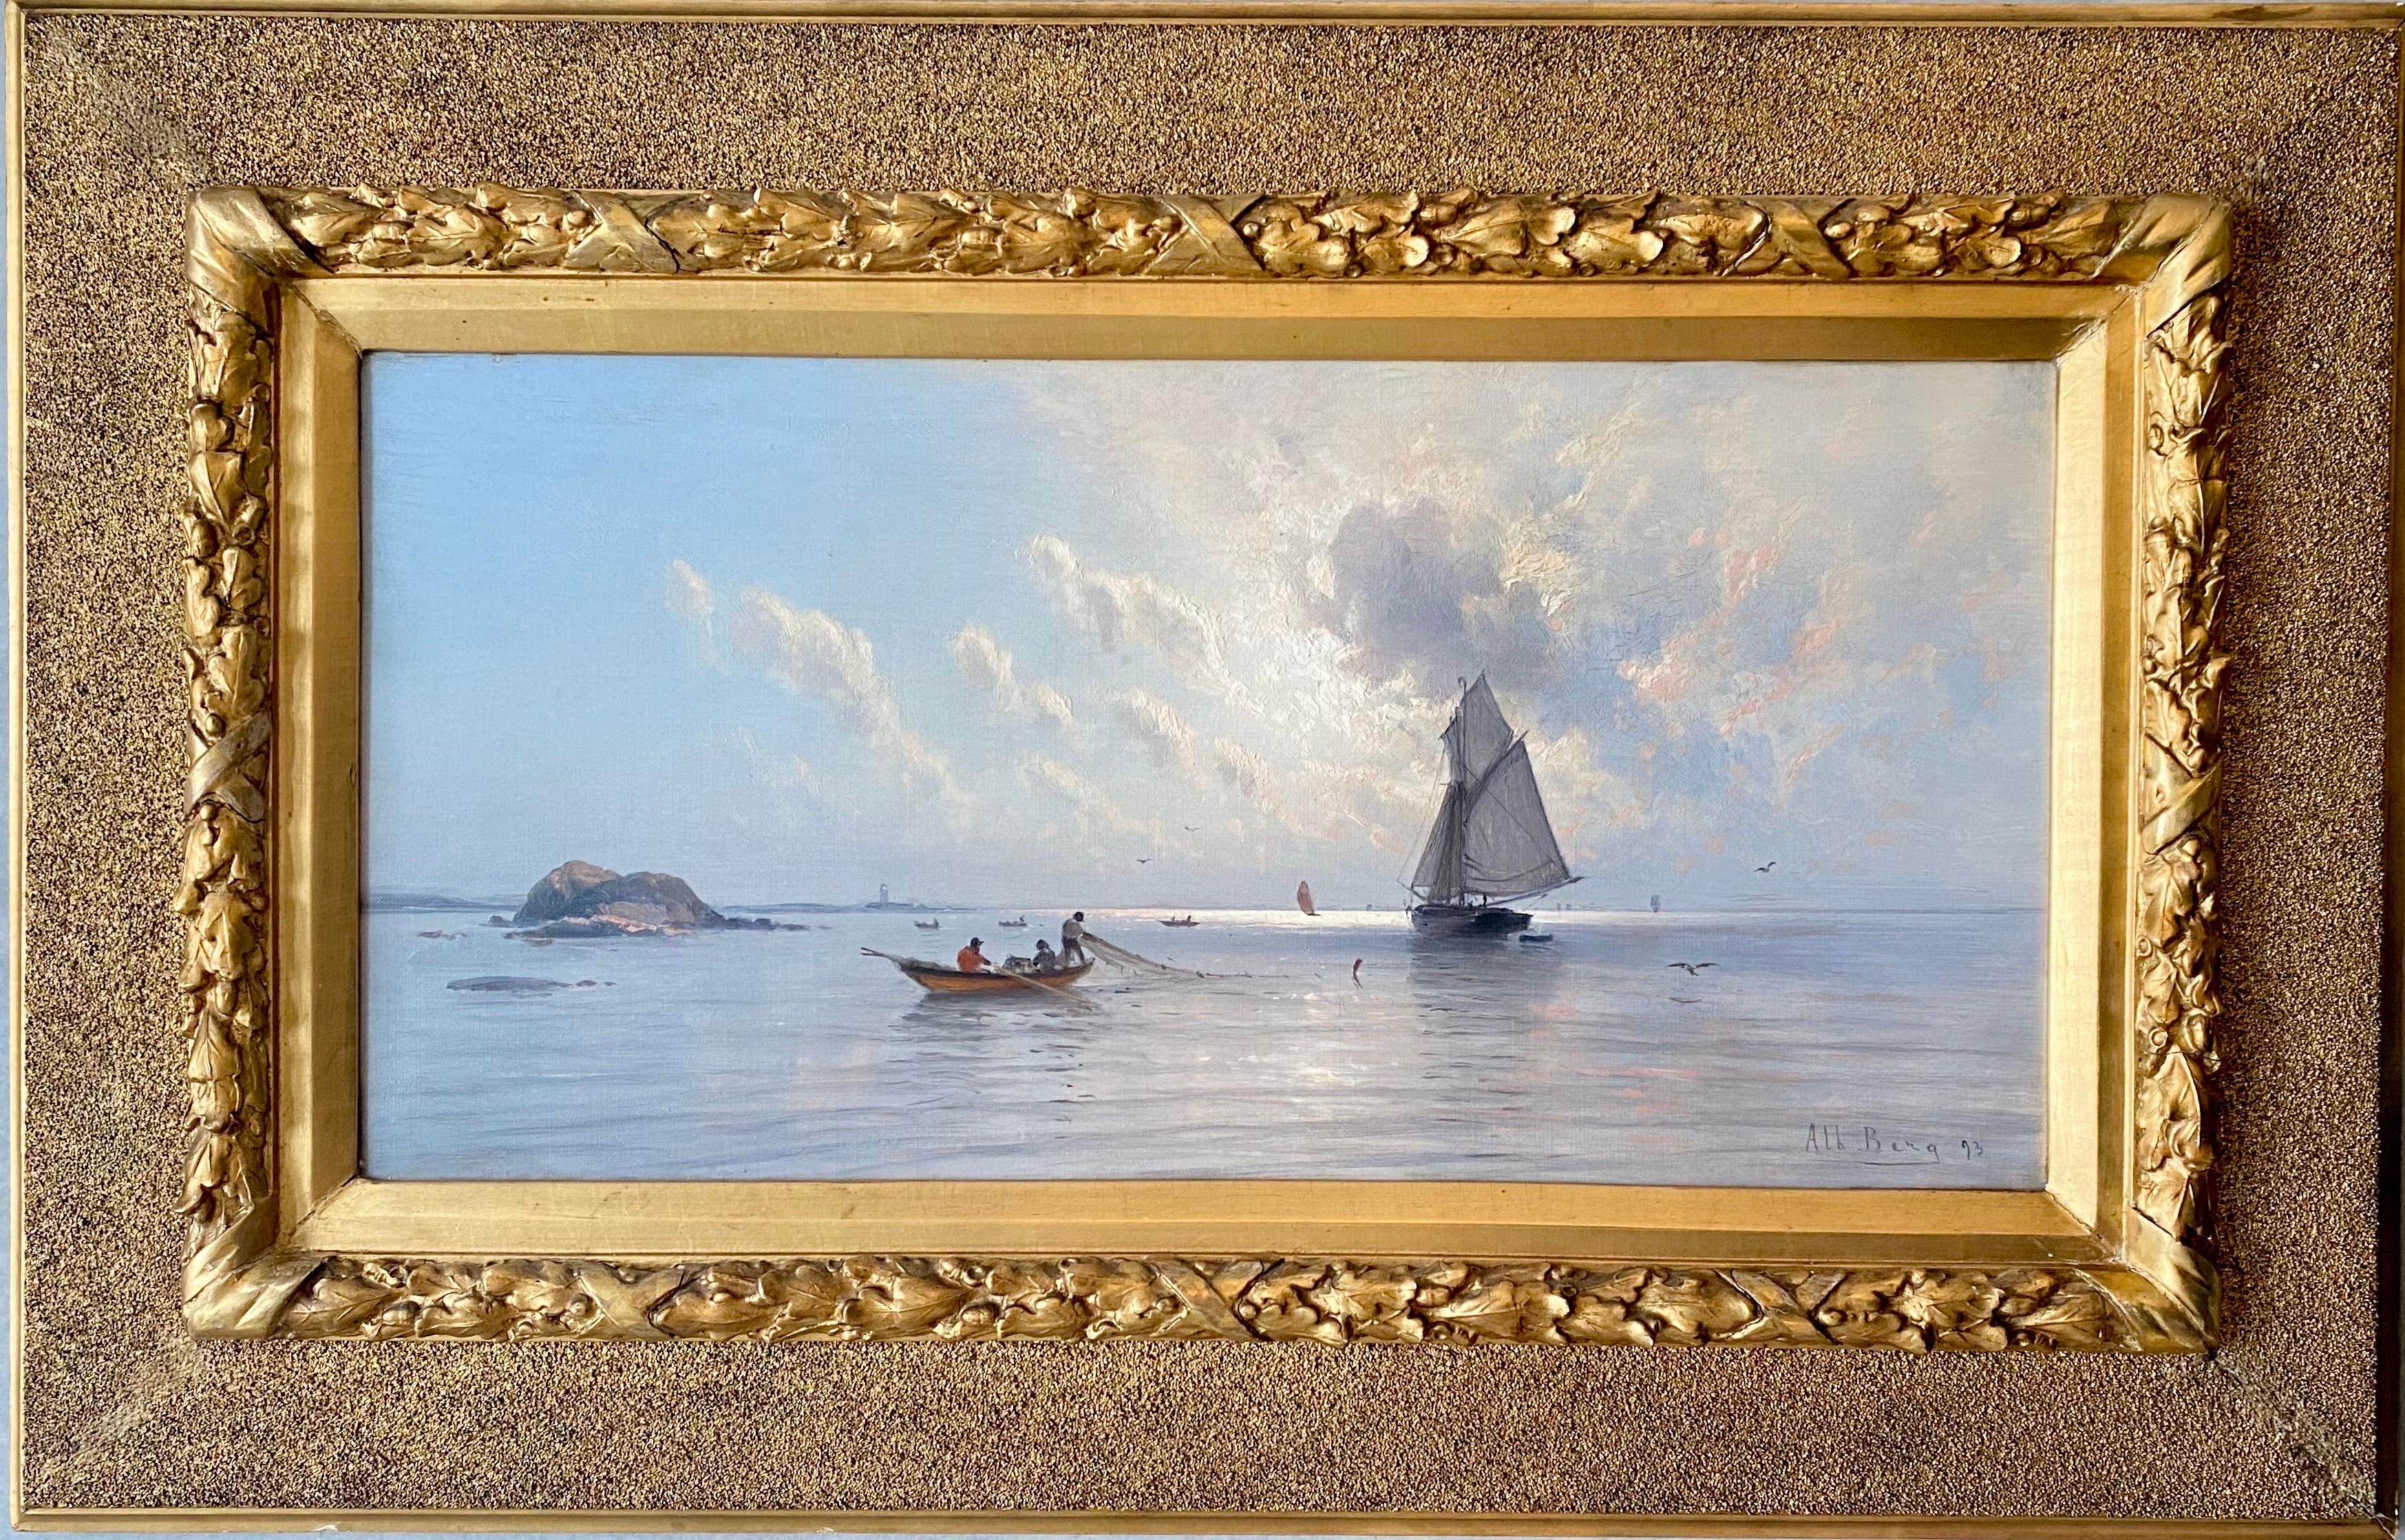 Albert Berg Figurative Painting - 19th century Impressionist painting Fishermen at sea - boat seascape marine